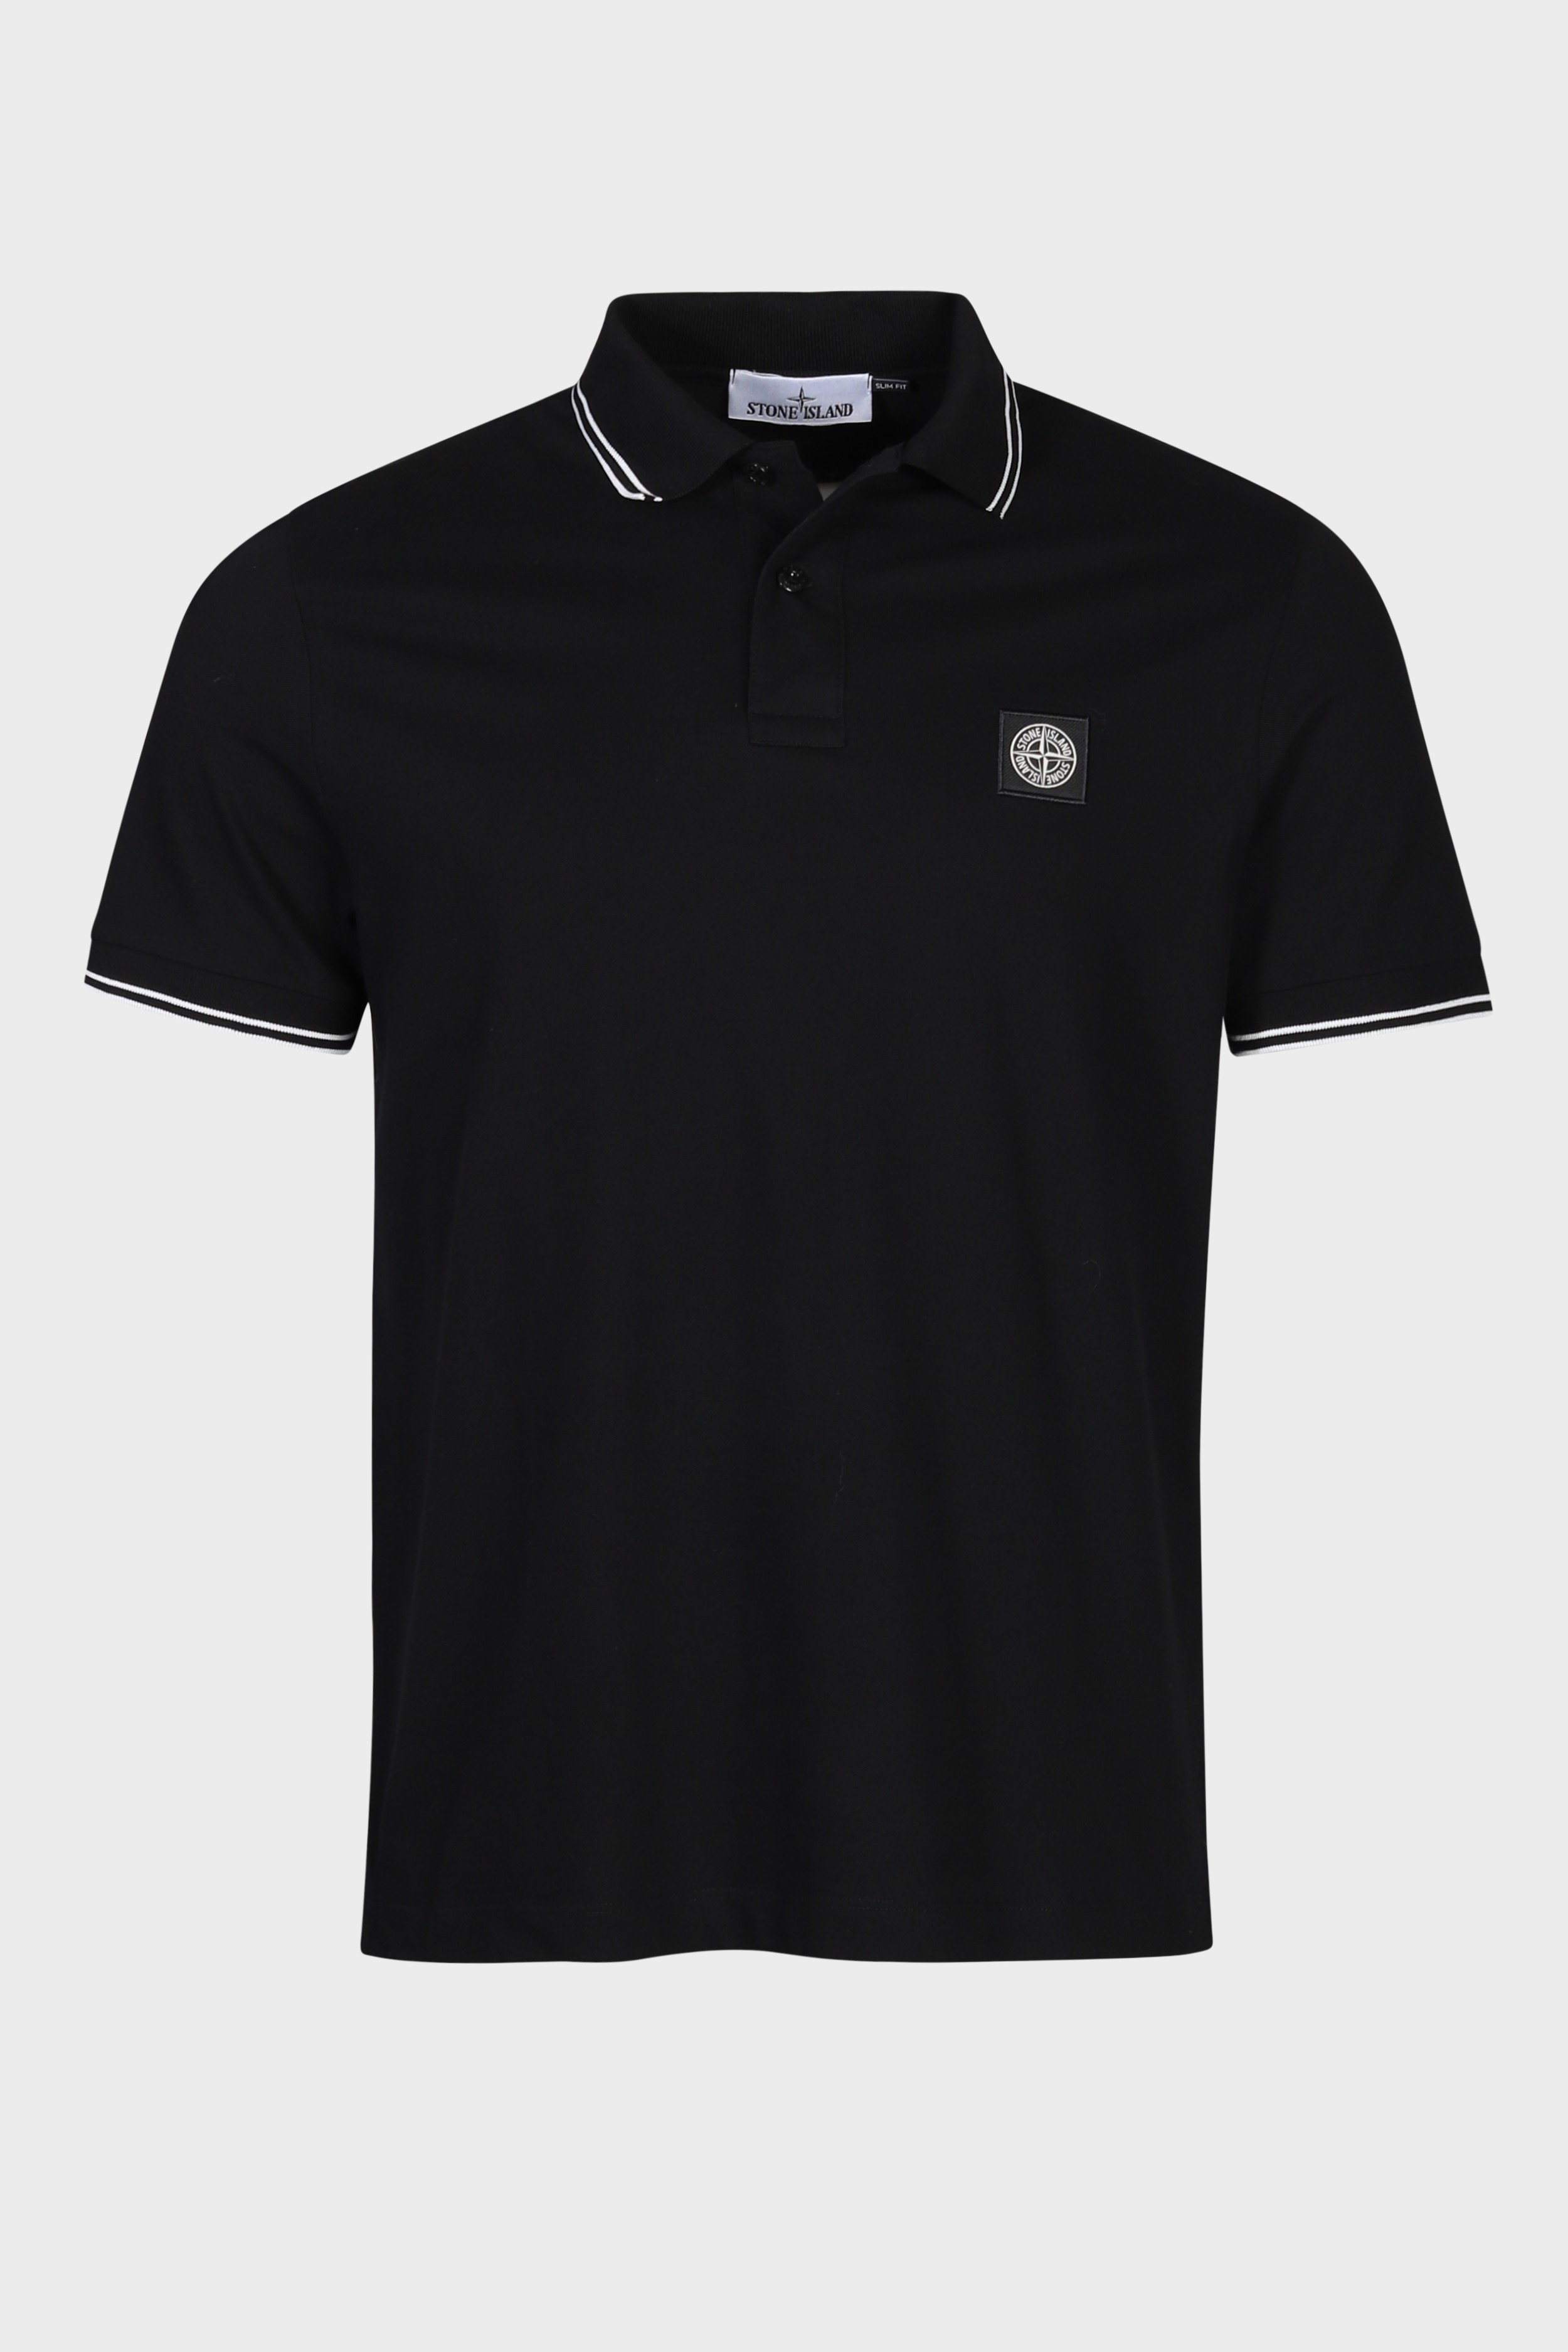 STONE ISLAND Slim Fit Polo Shirt in Black